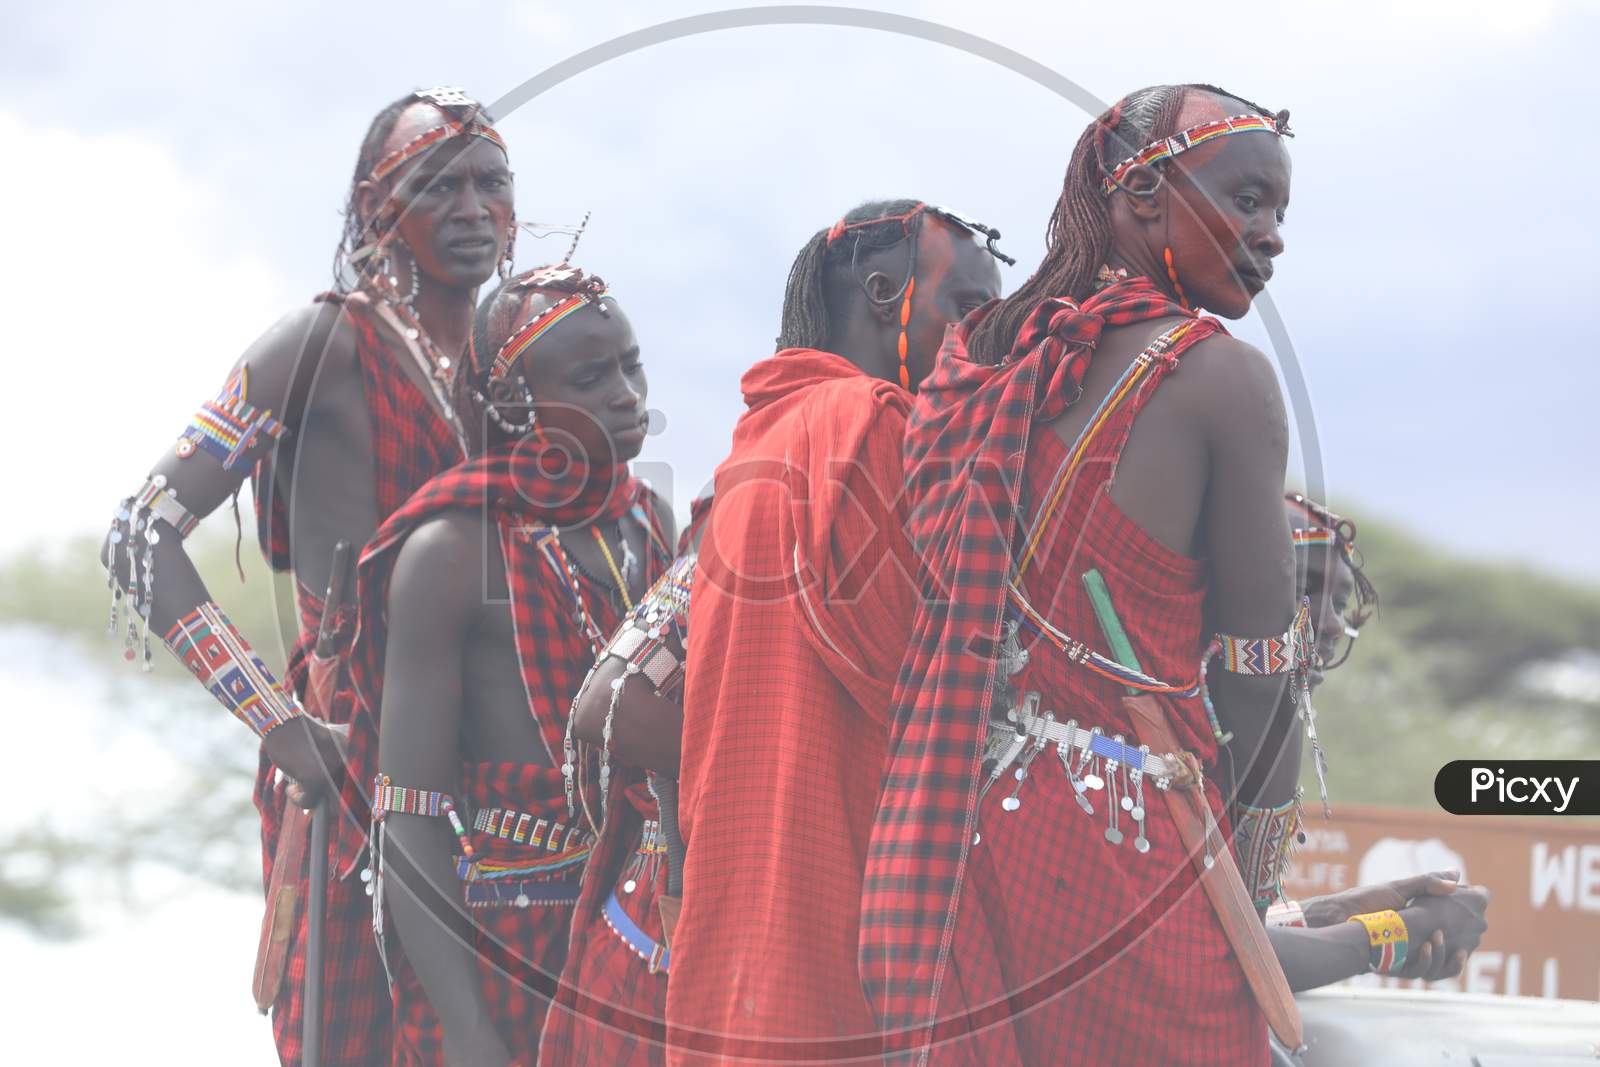 Group of tribal men of Kenya